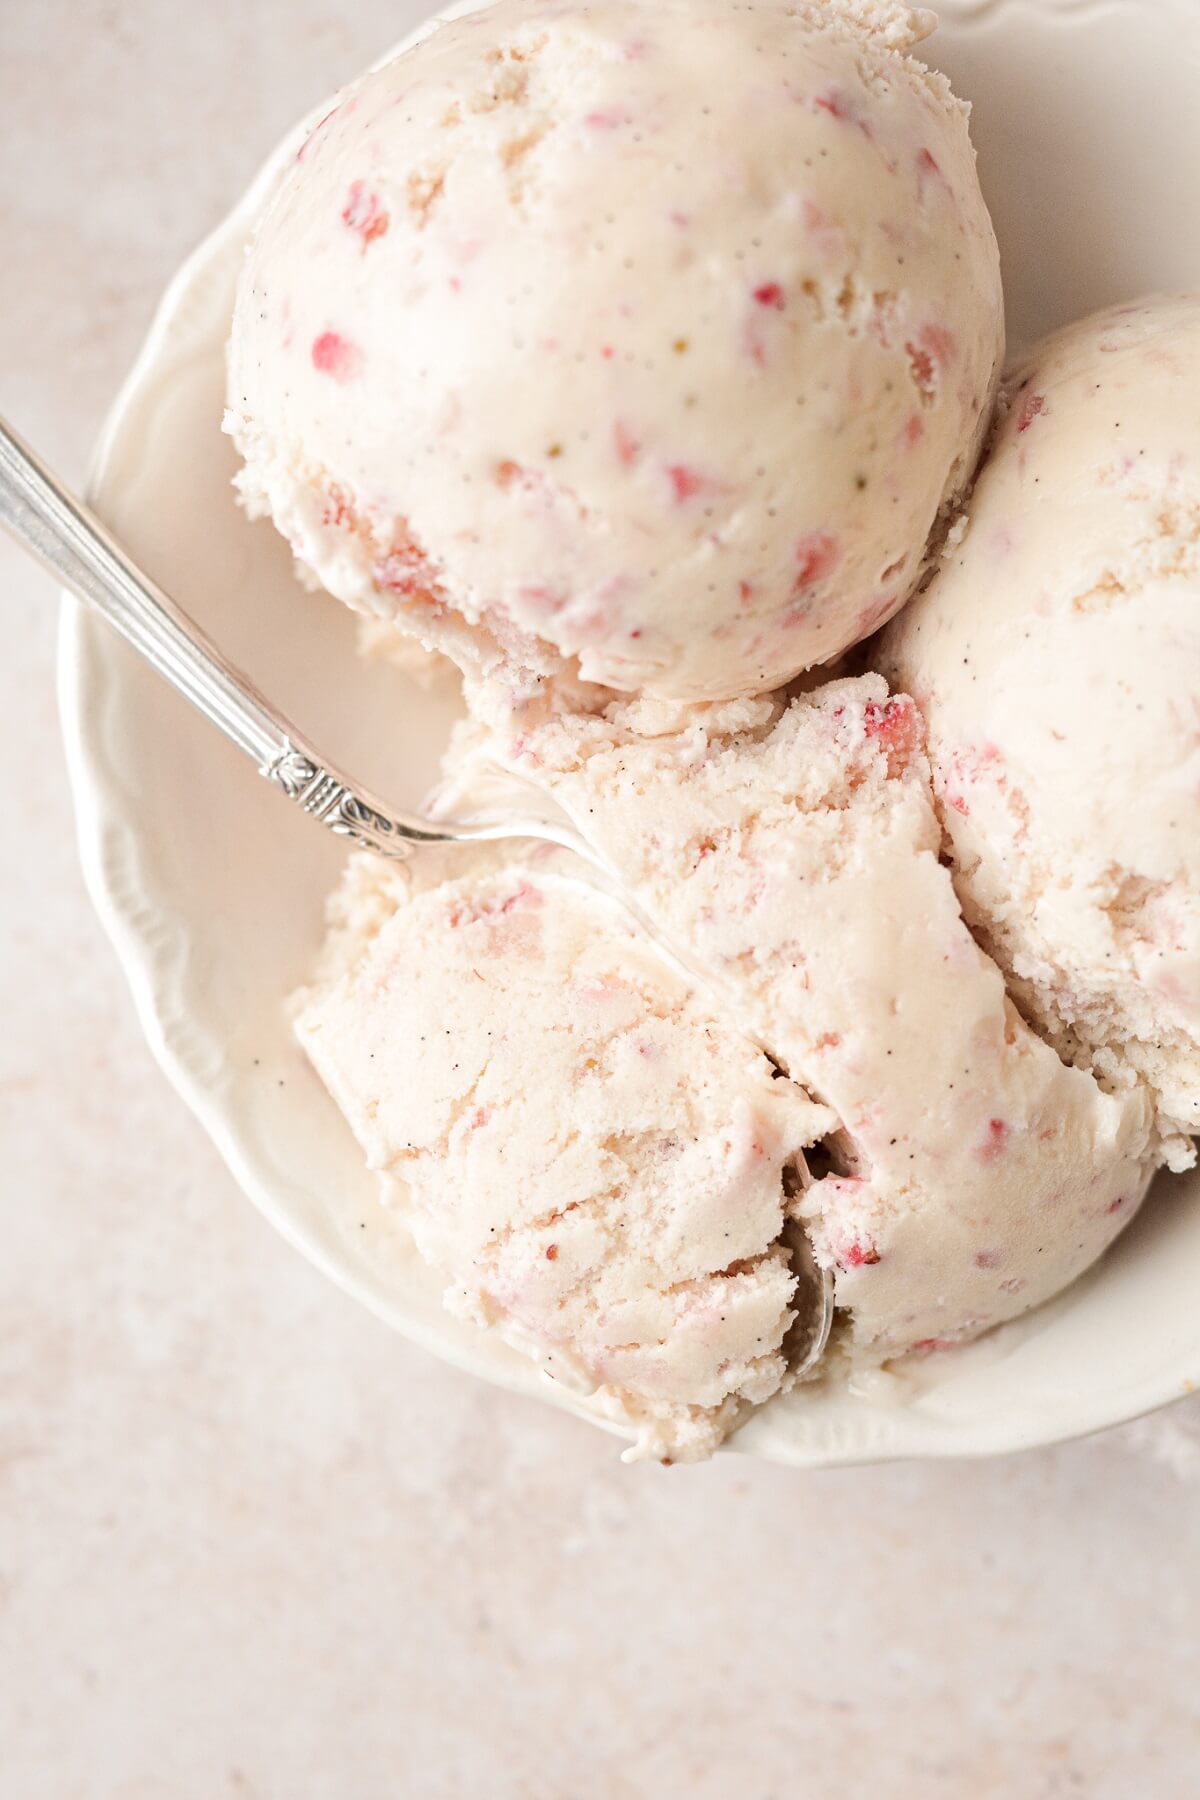 Scoops of strawberry vanilla bean ice cream.